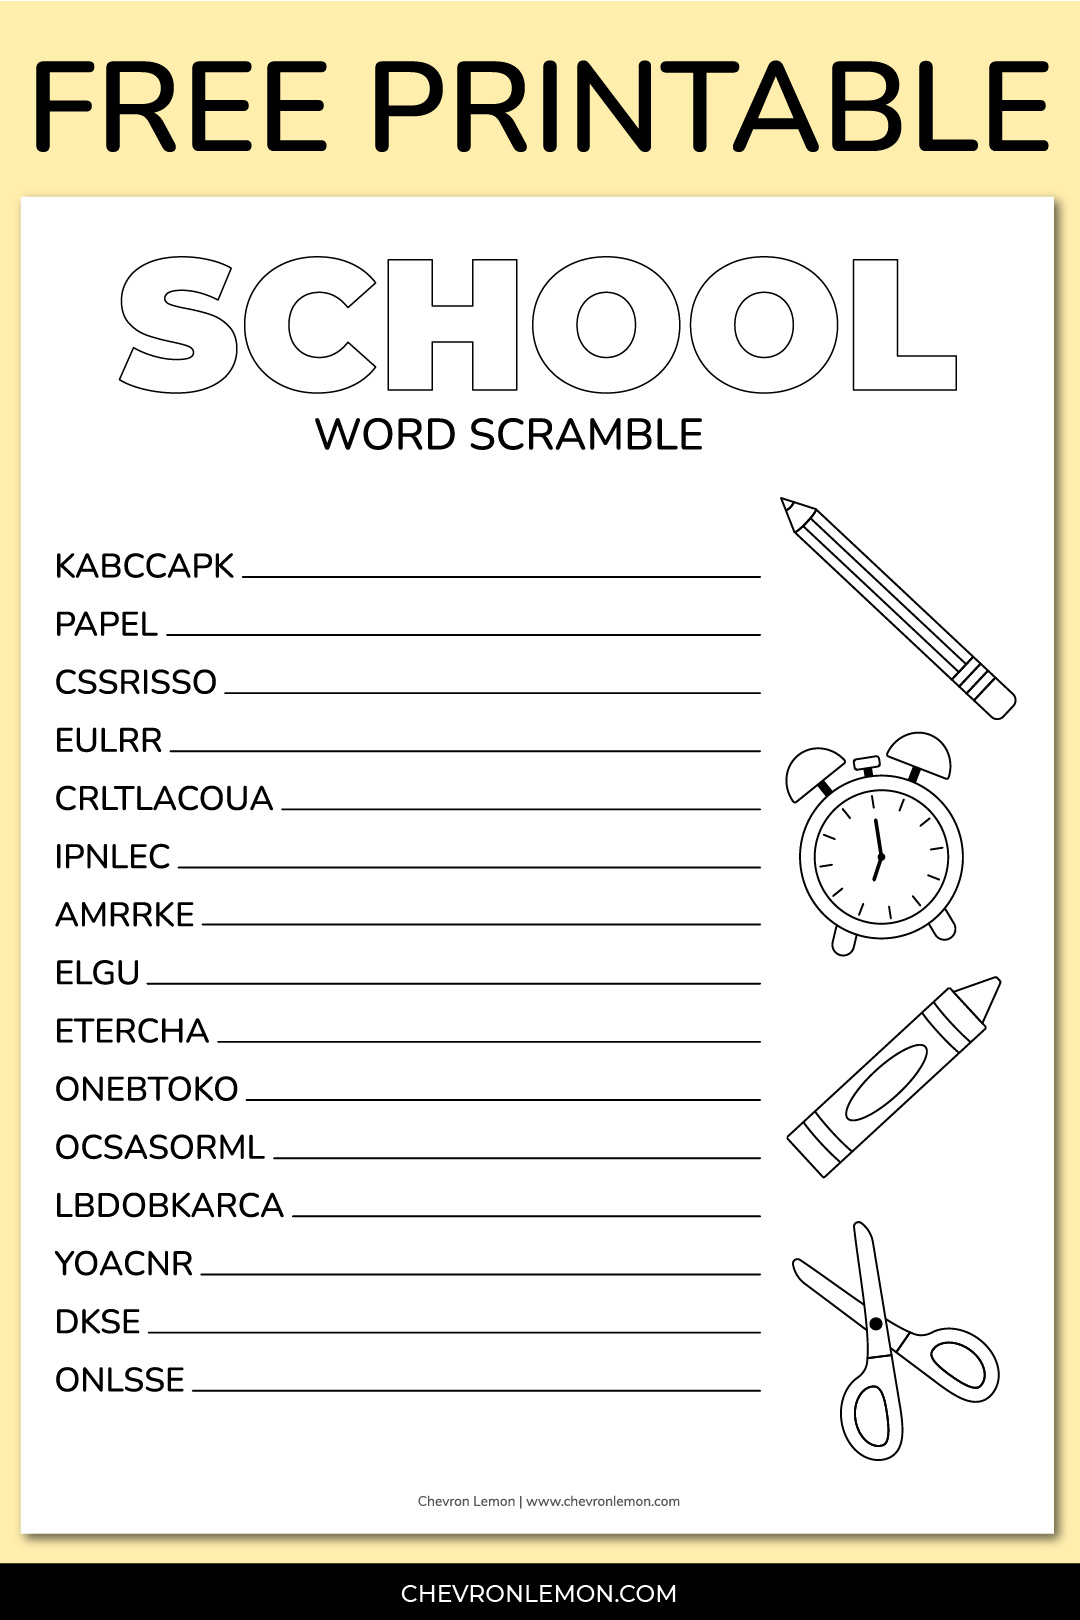 School word scramble